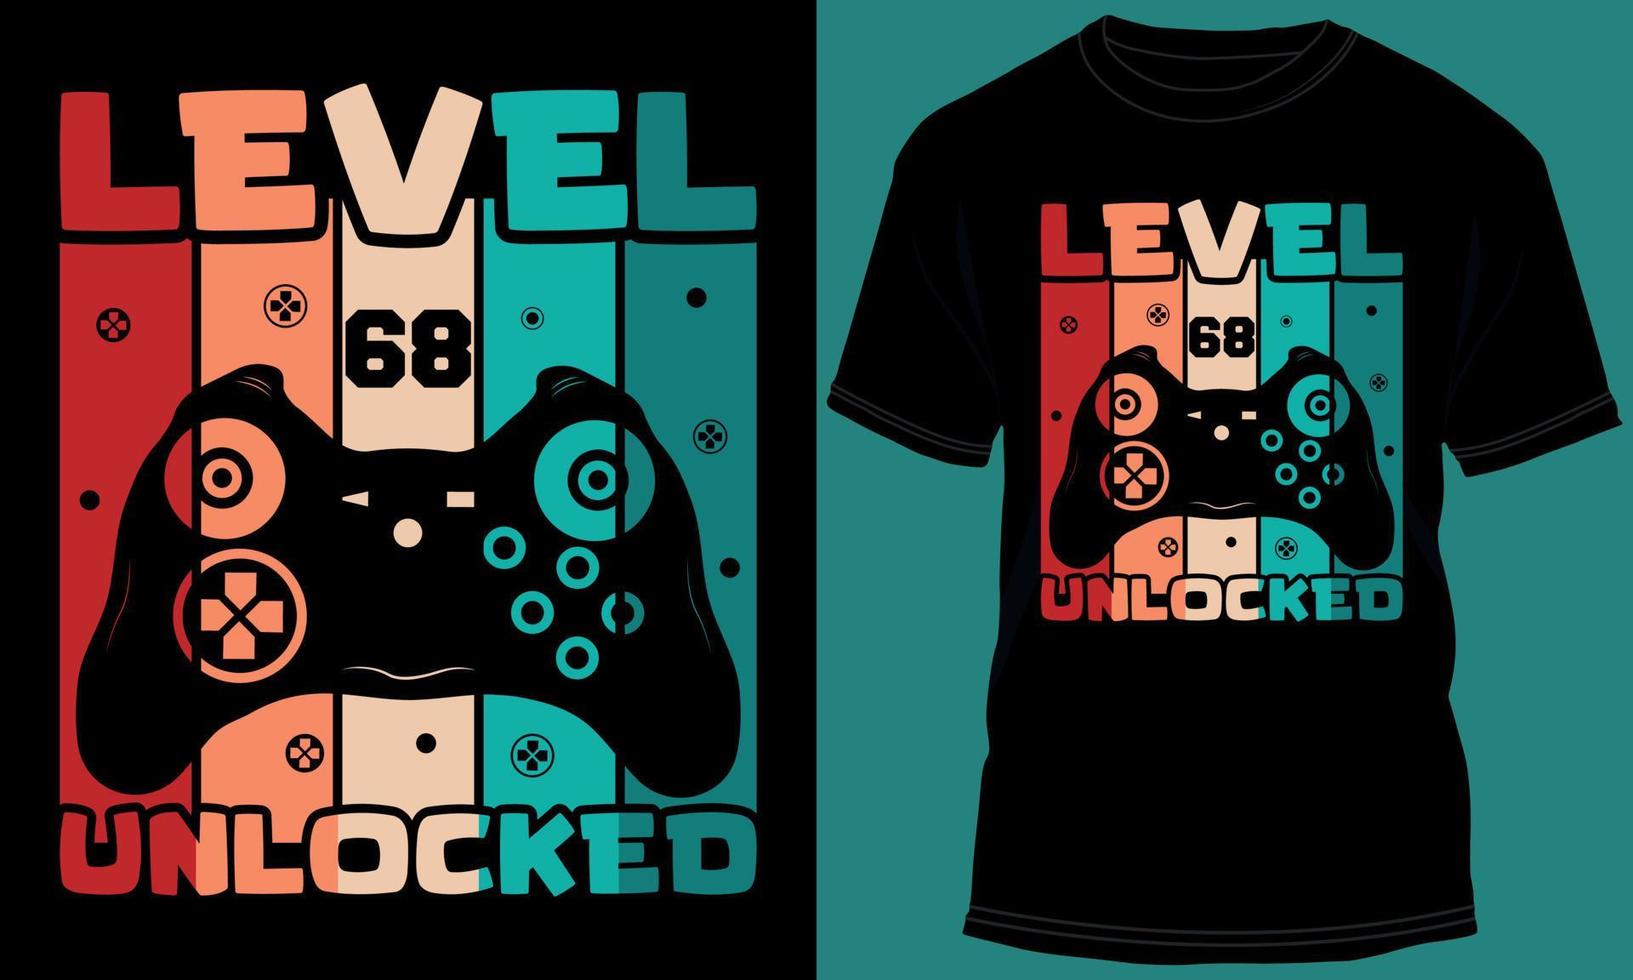 Gamer or Gaming Level 68 Unlocked Tshirt Design vector